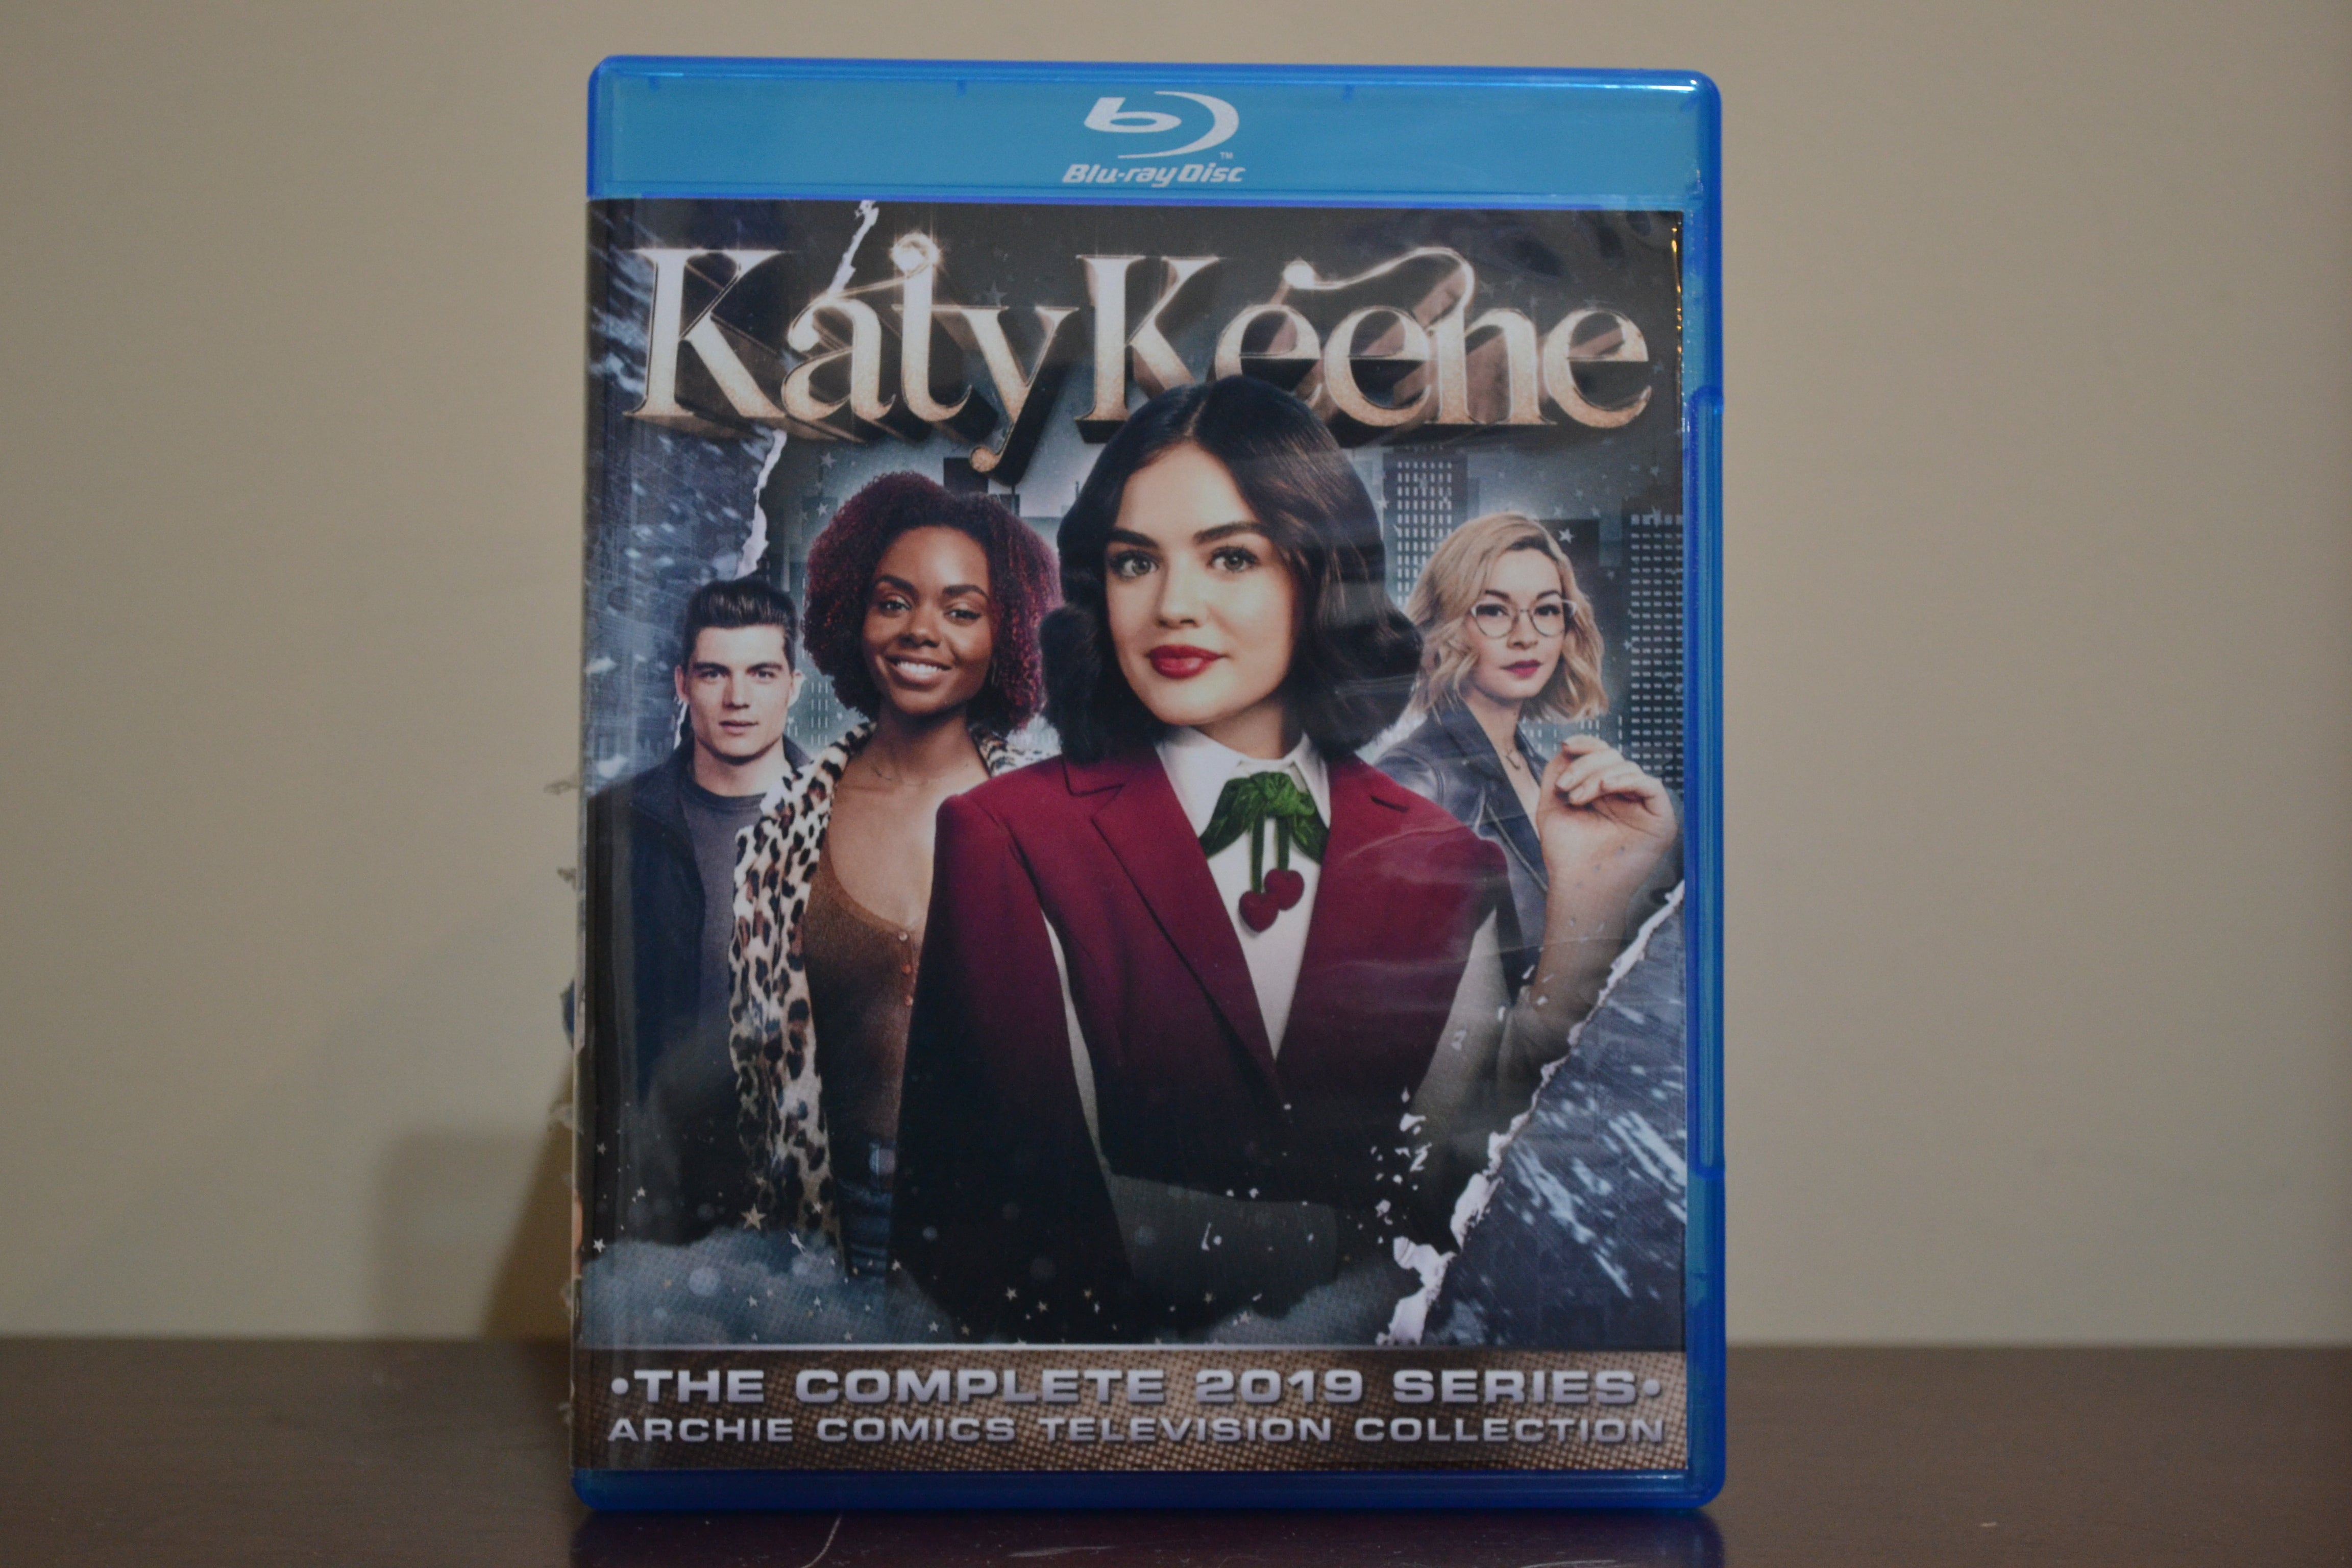 Katy Keehe The Complete Series Blu-ray